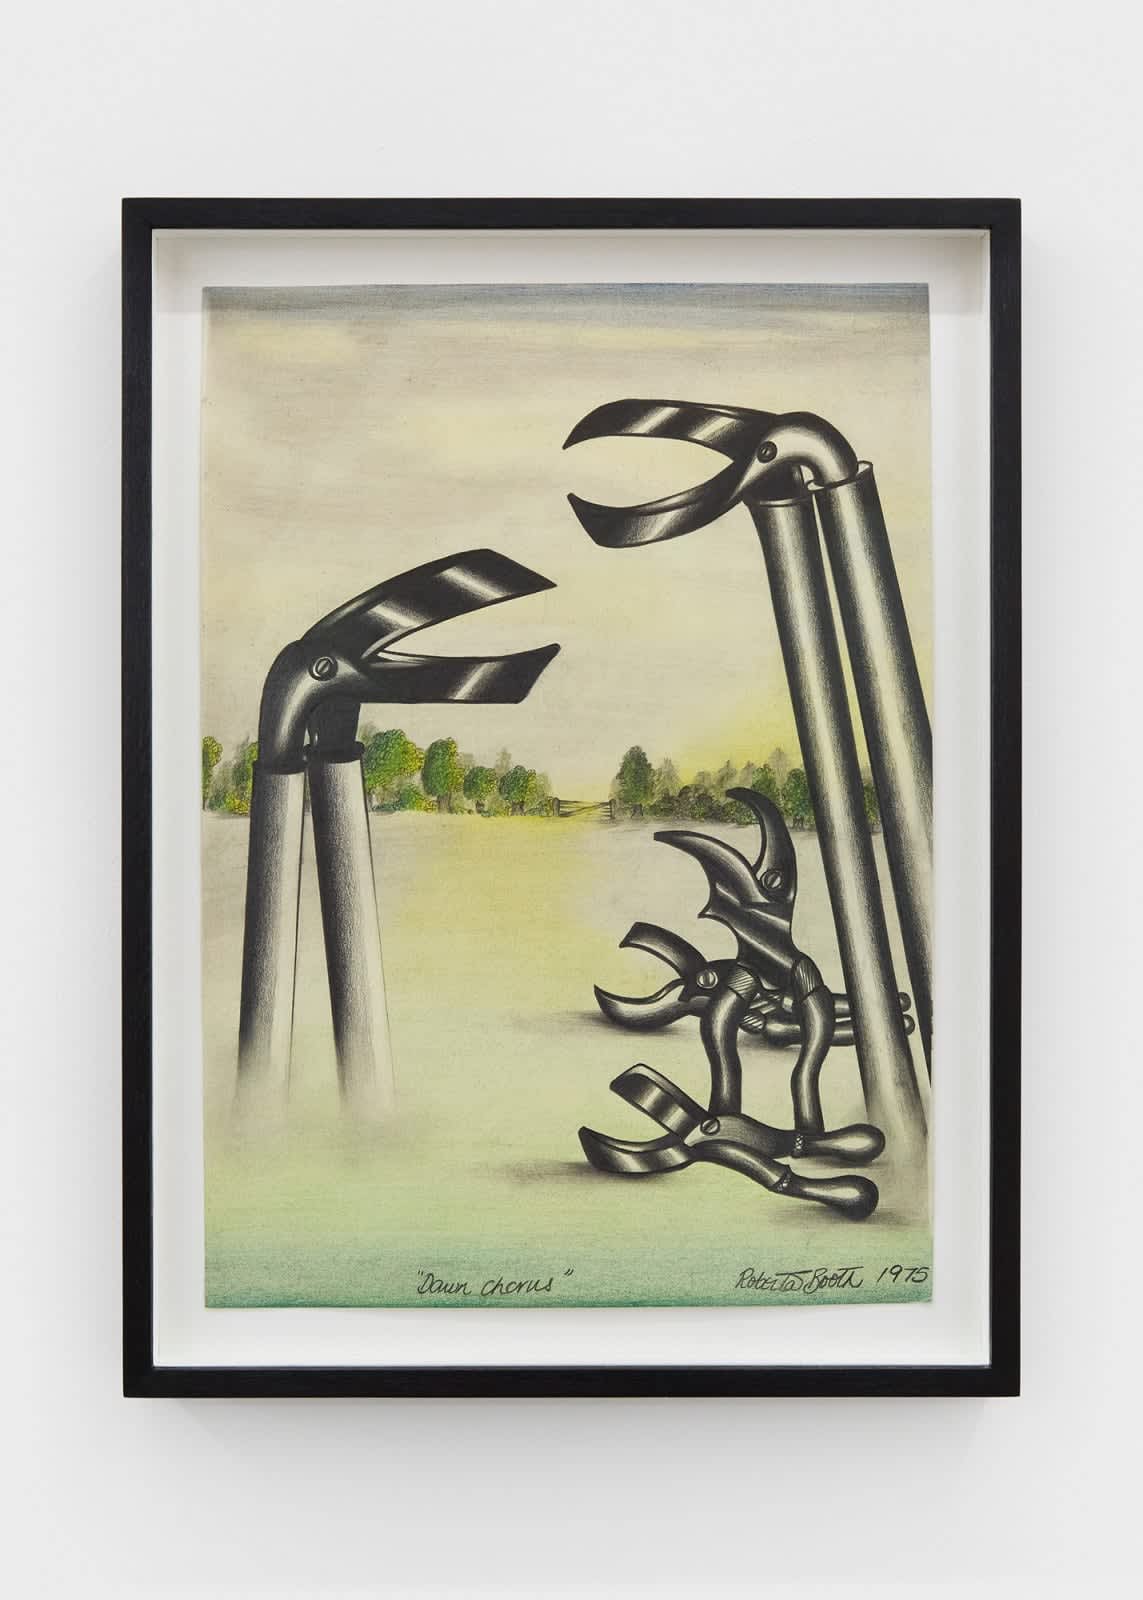 Roberta Booth, 'Dawn Chorus', 1975. Graphite on paper 40.8 x 30.6 cm (framed).